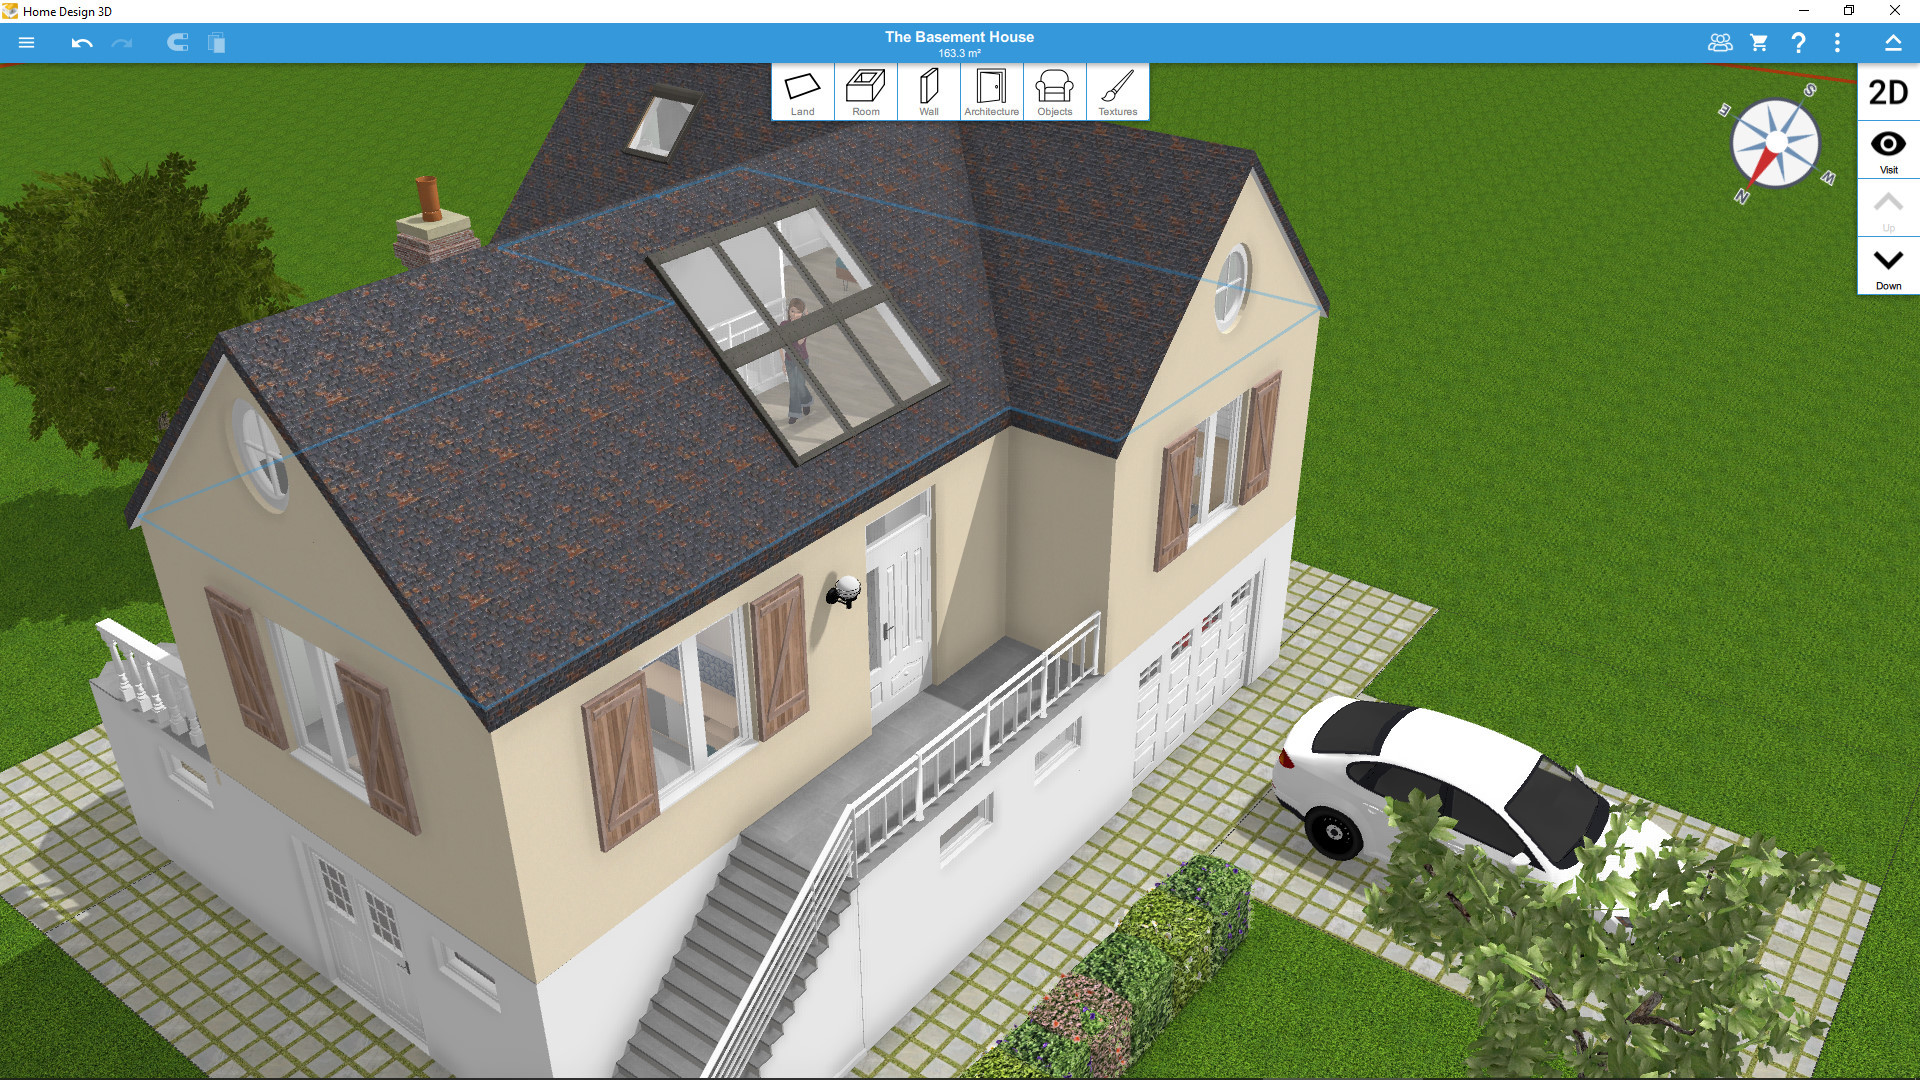 Home Design 3D sur Steam